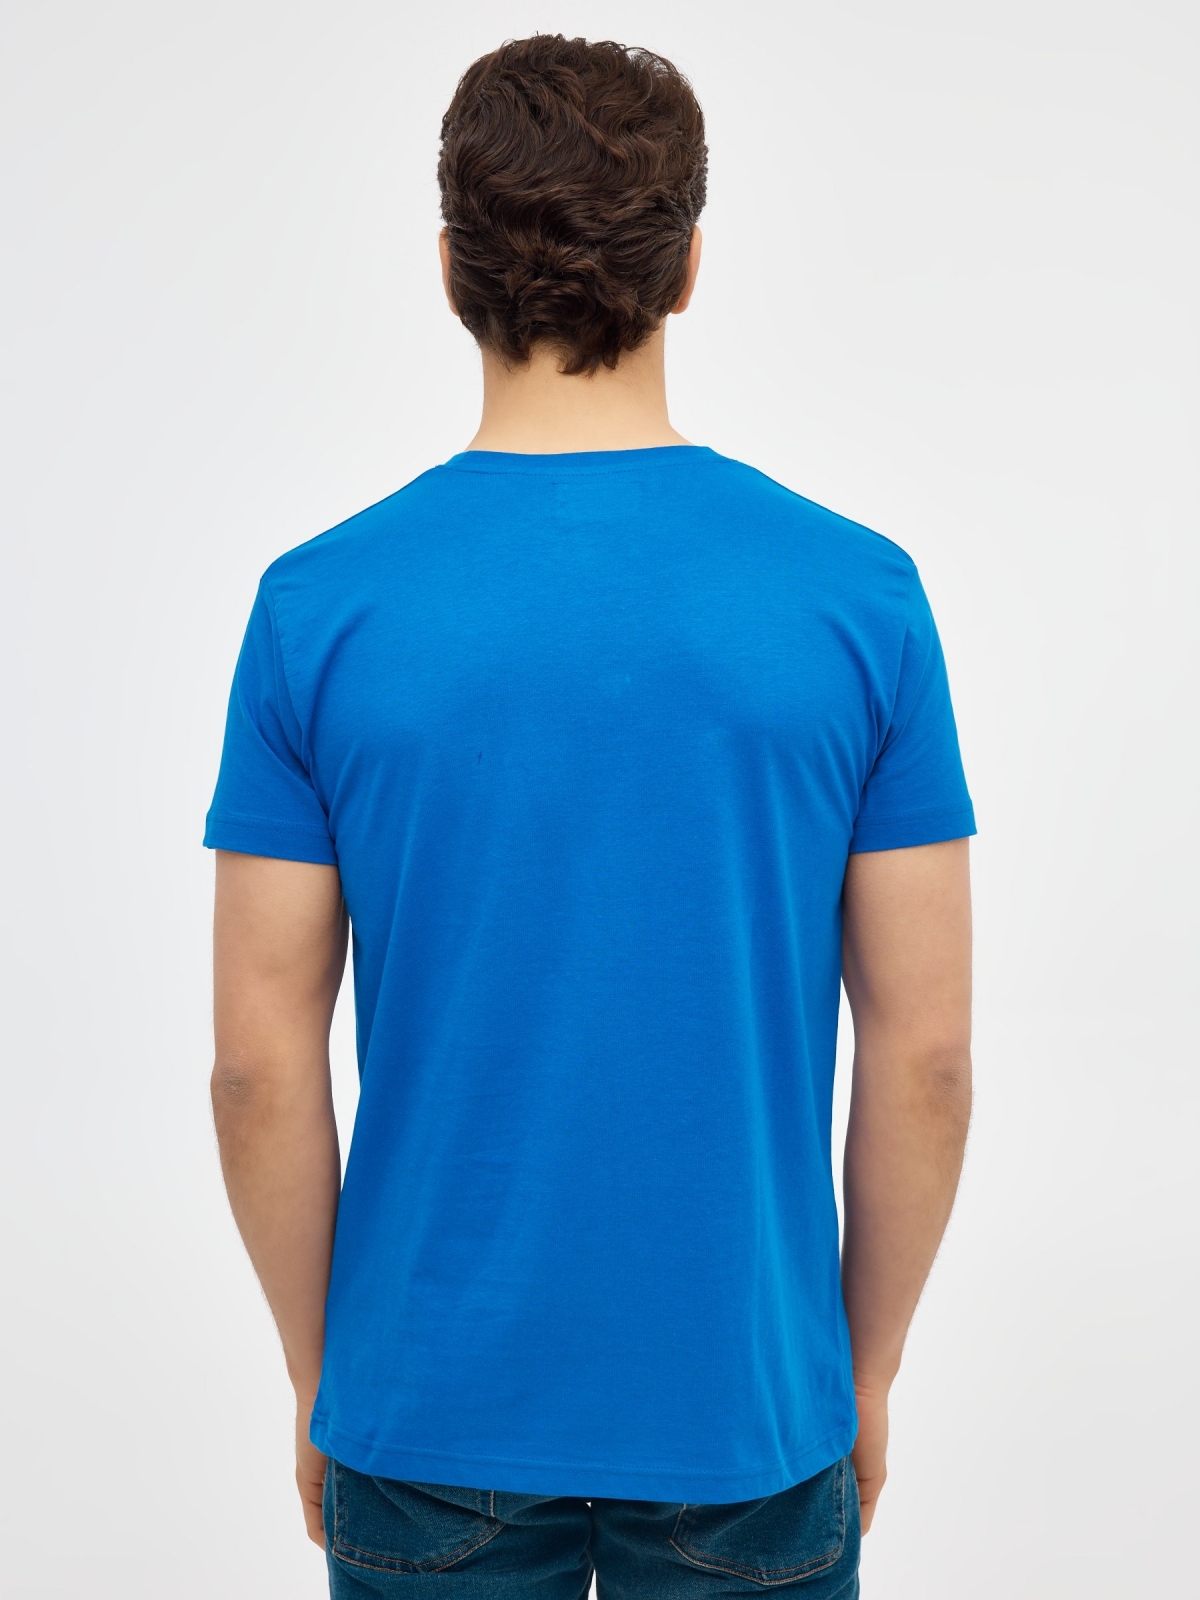 Camiseta básica manga corta azul ducados vista media trasera